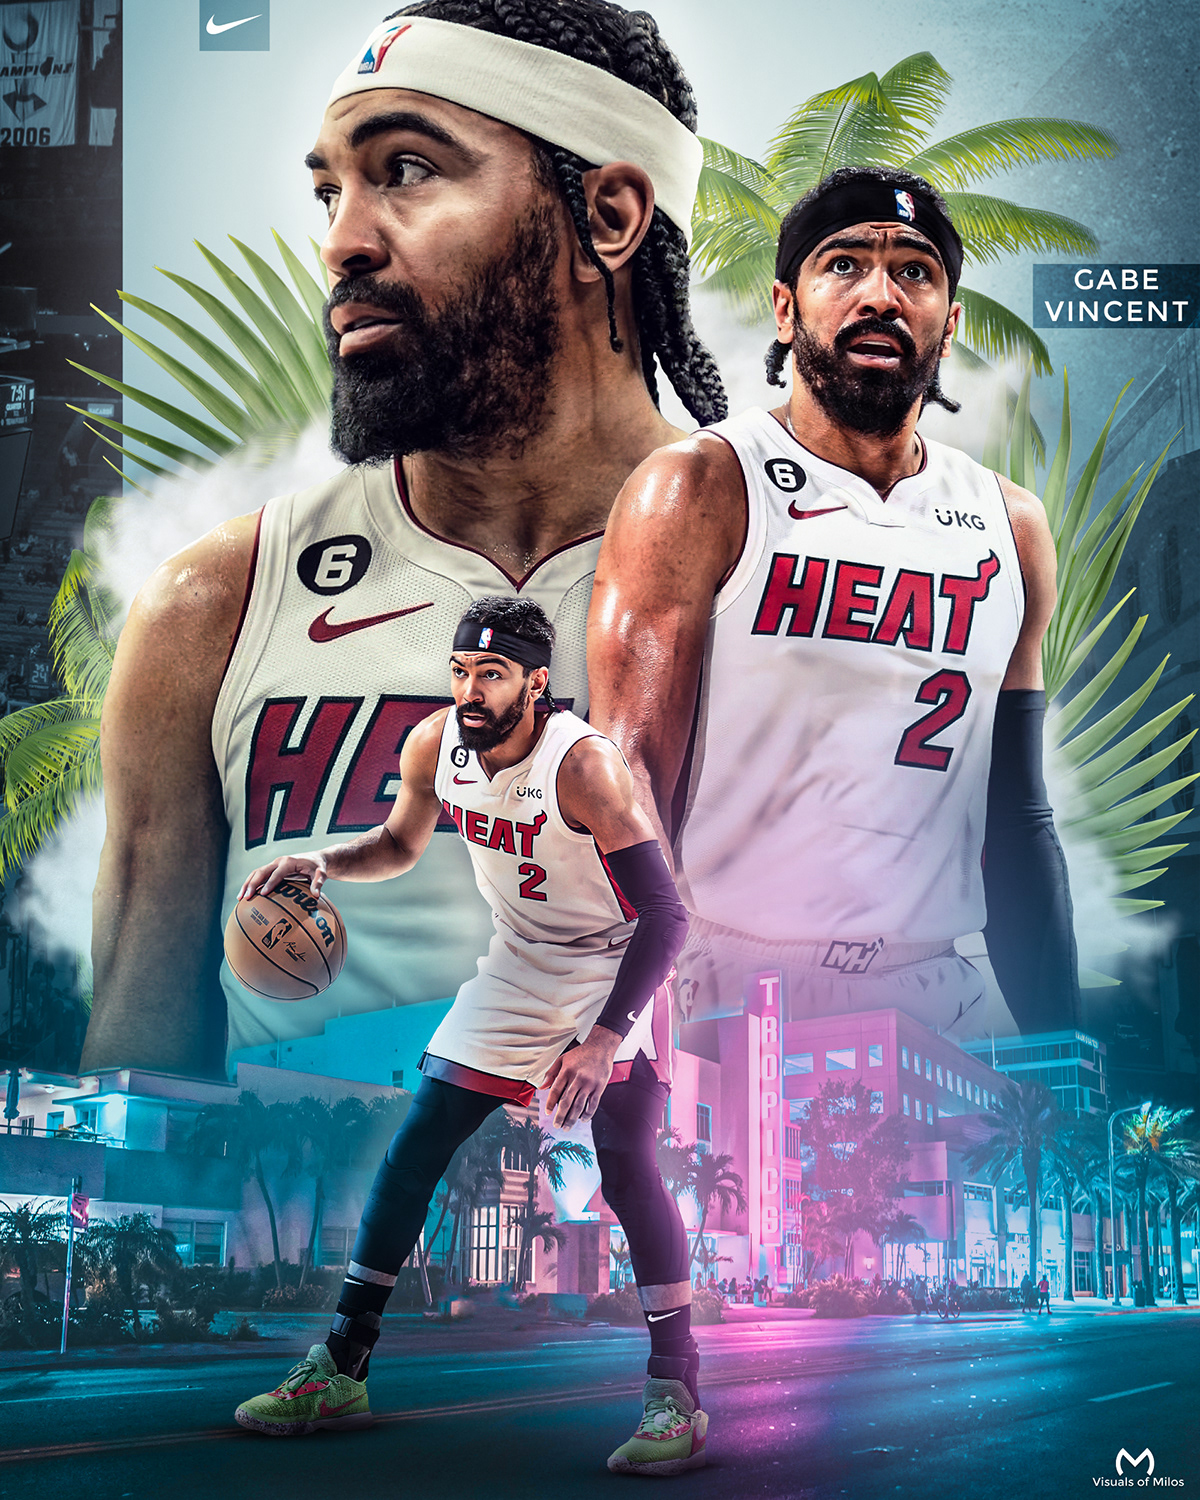 miamiheat digitalart NBA design basketball art gabevincent NBAfinals NBAPlayoffs